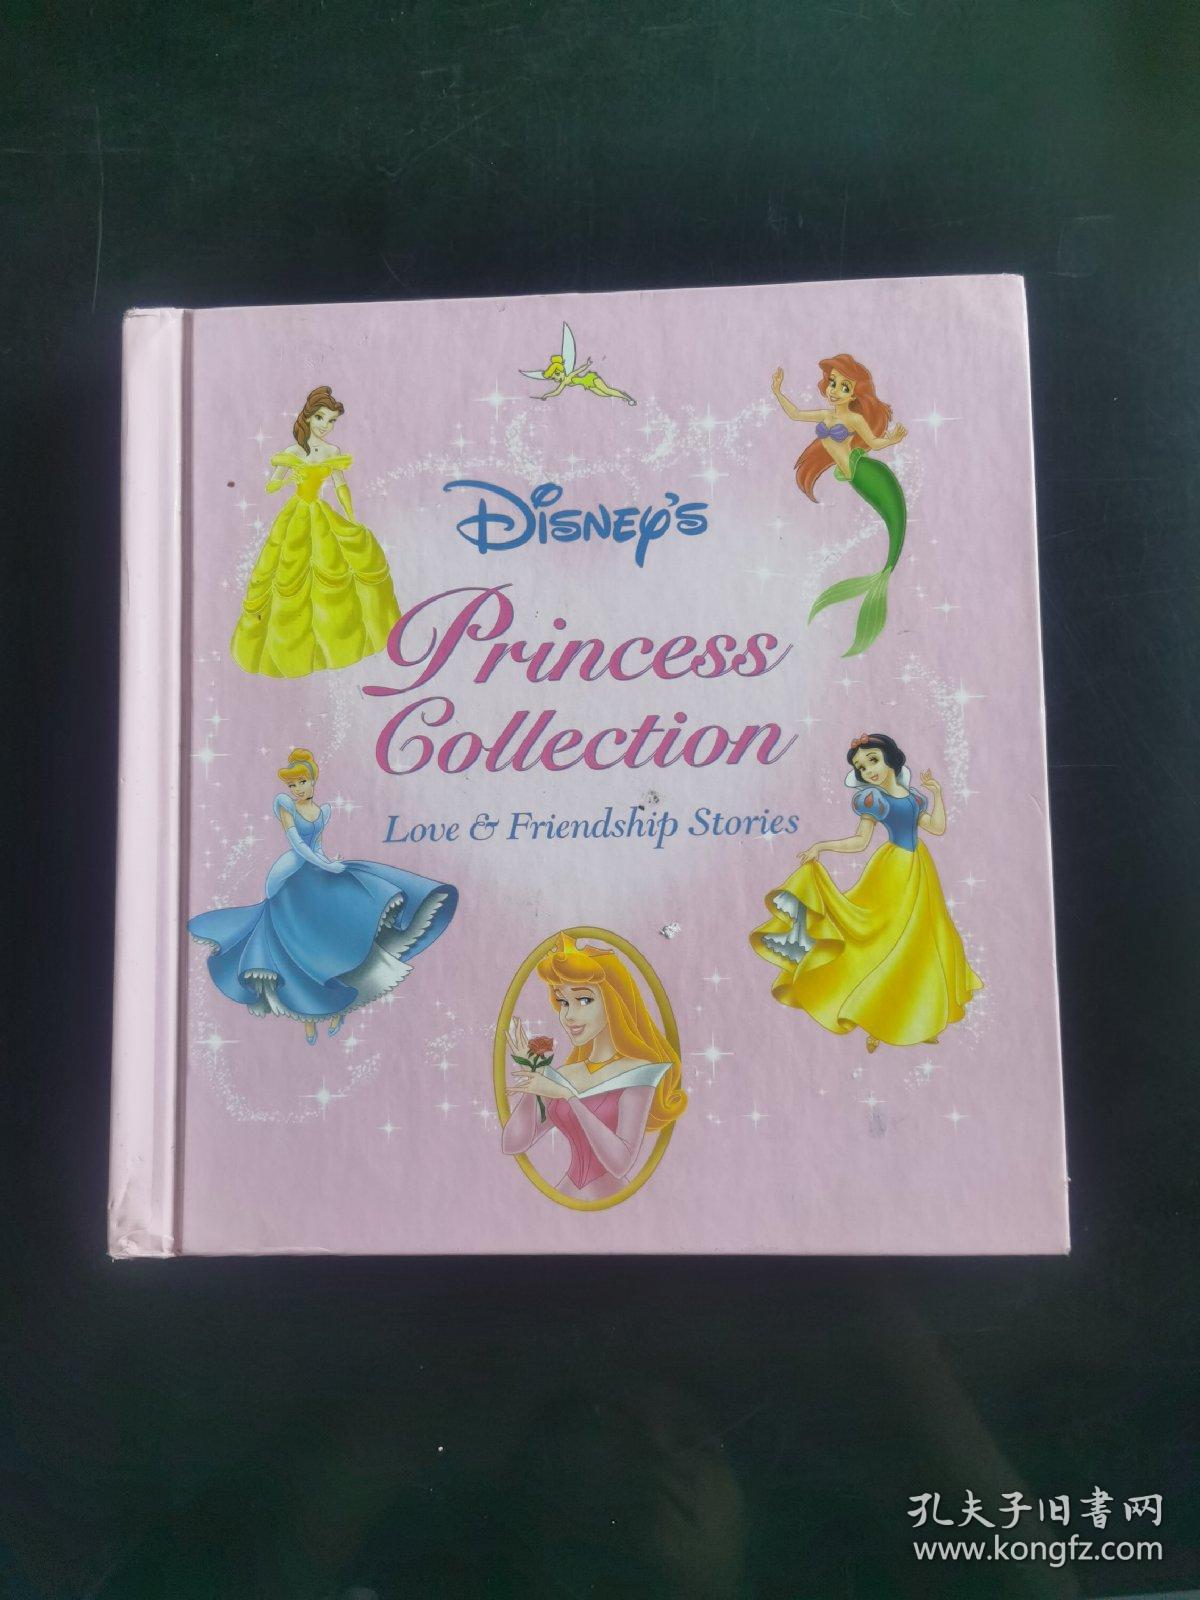 Disneq's  Princess  Collection